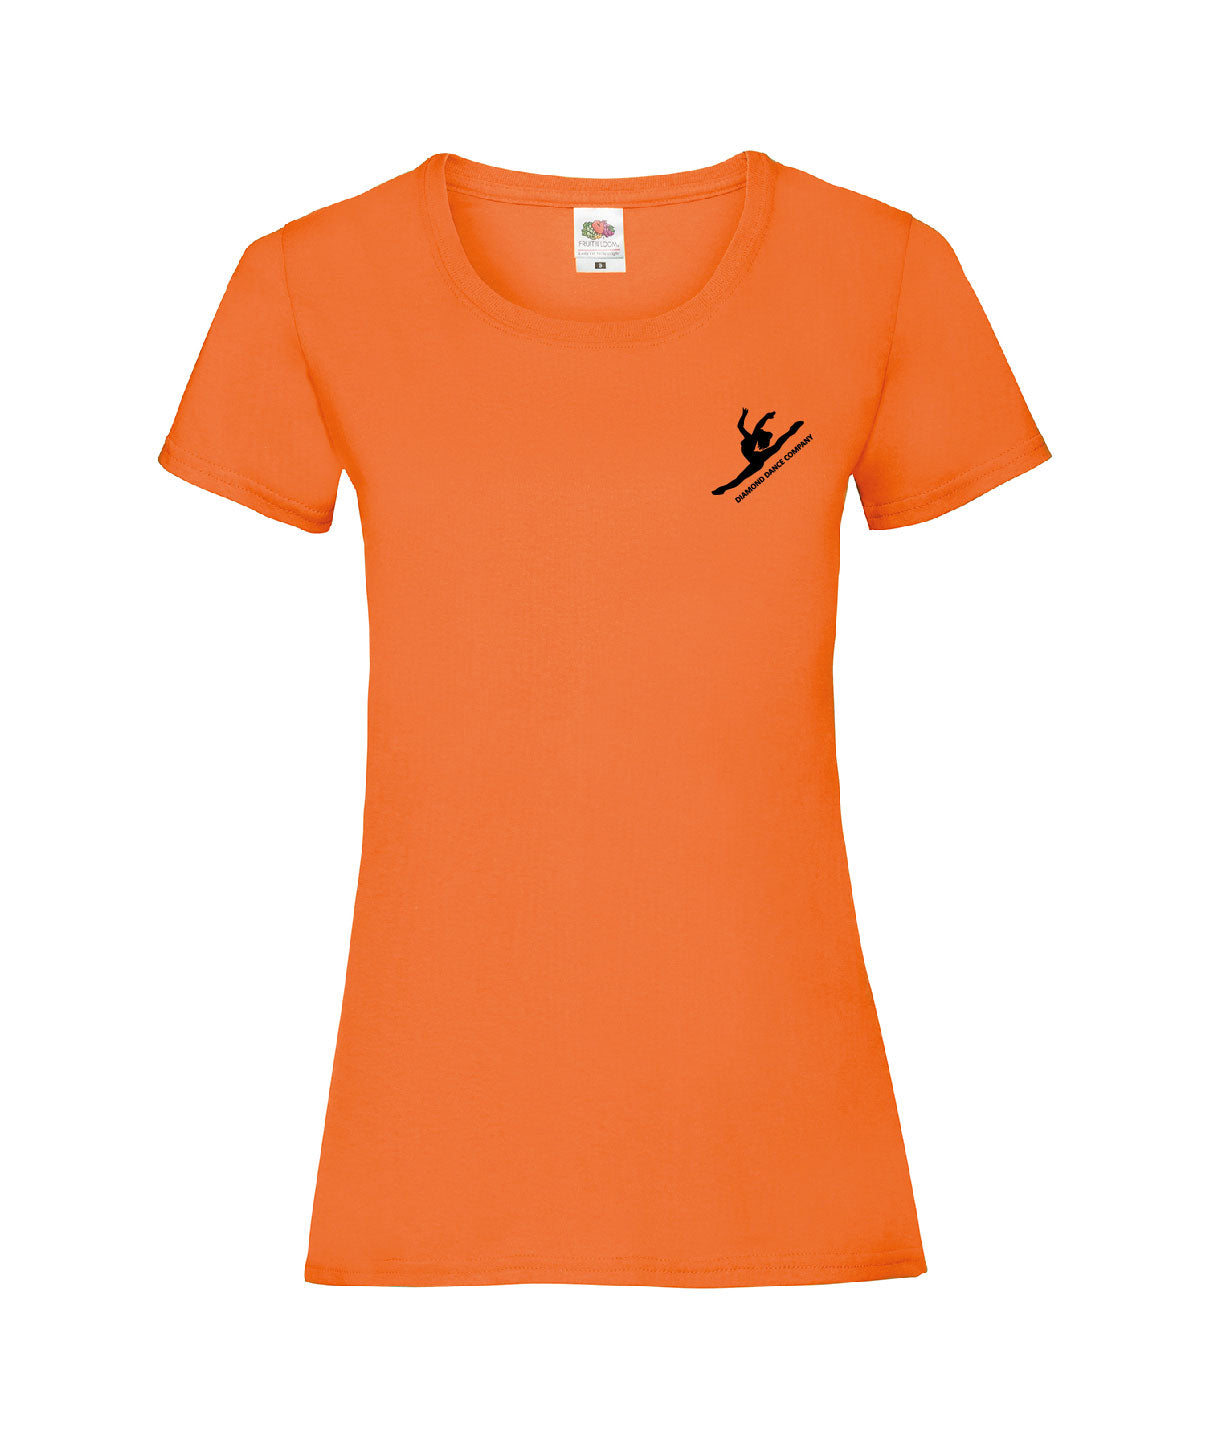 Womens Fitted Orange T-Shirt - Diamond Dance